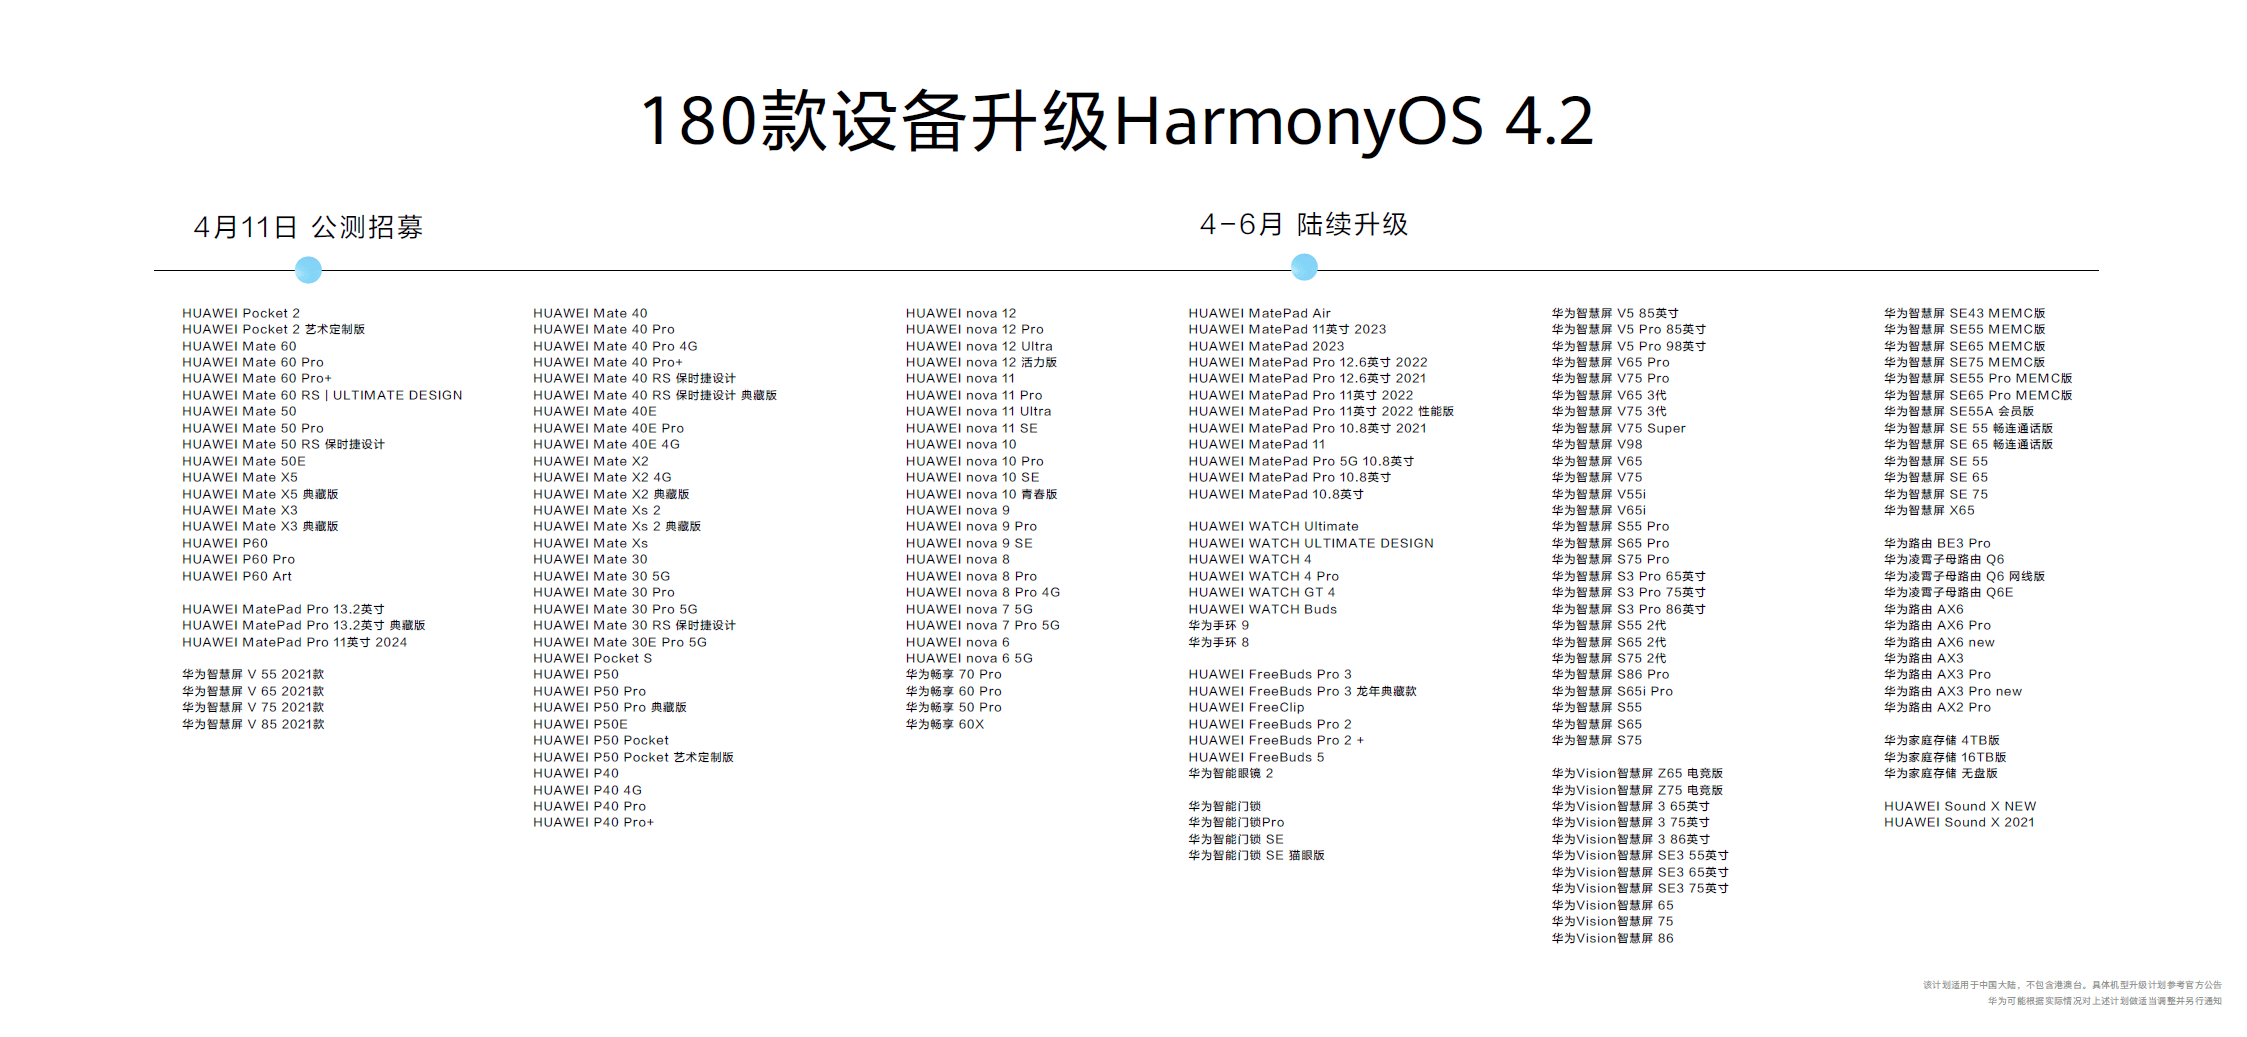 HUAWEI Pura 70 Ultra搭载Harmony OS 4.2，更好玩，更强大-最极客